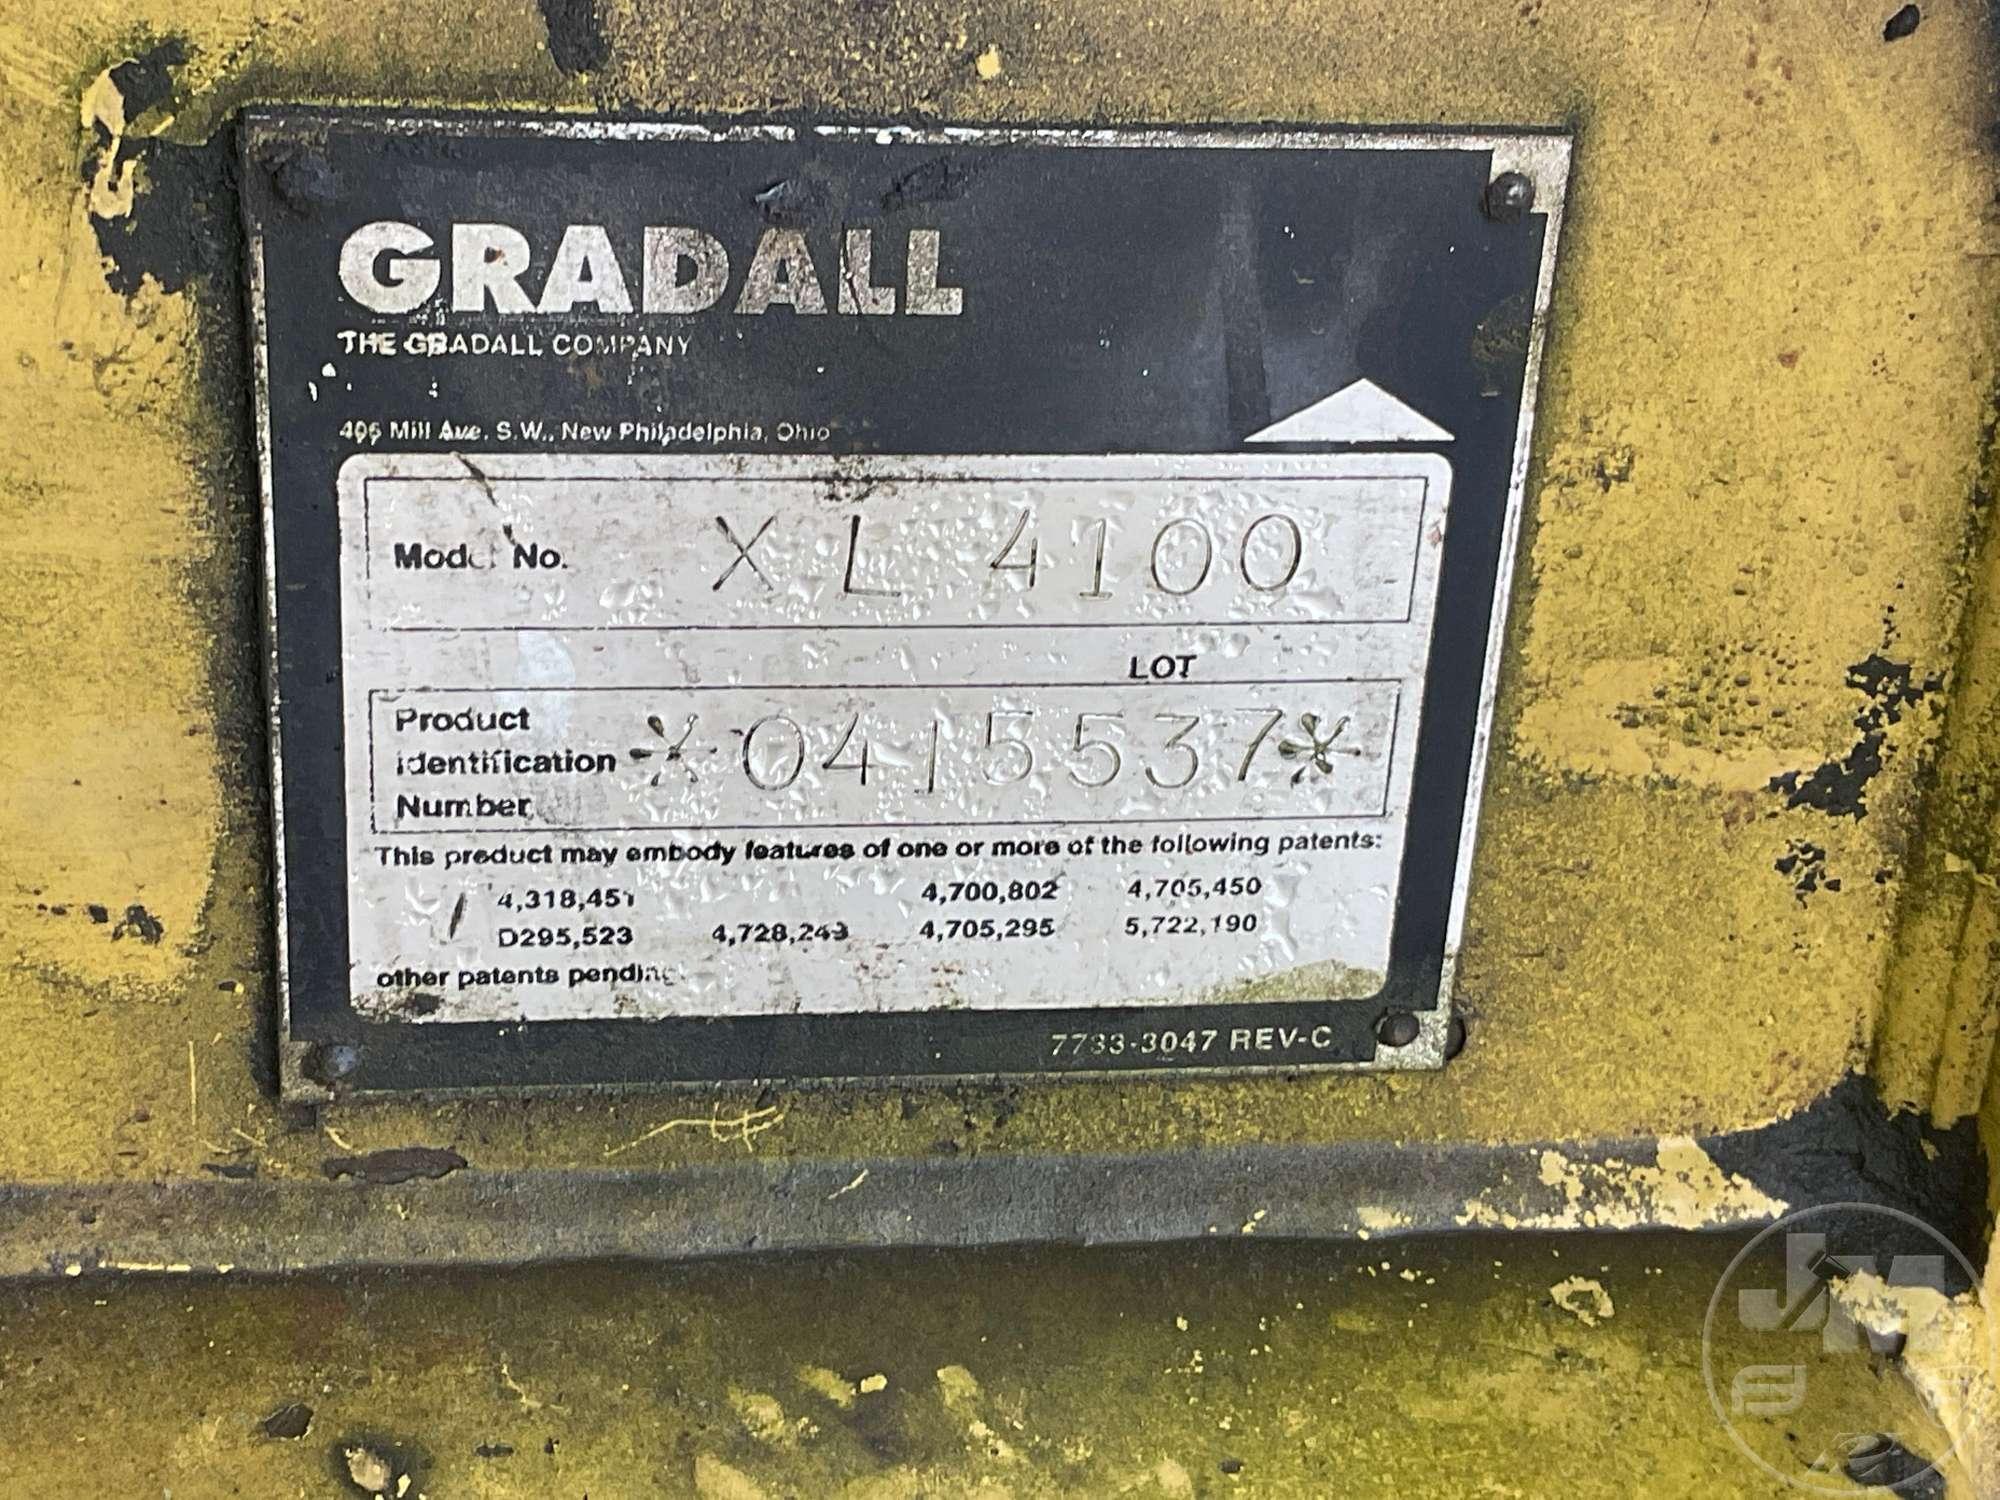 2001 GRADALL XL4100 MOBILE EXCAVATOR SN: 0415537